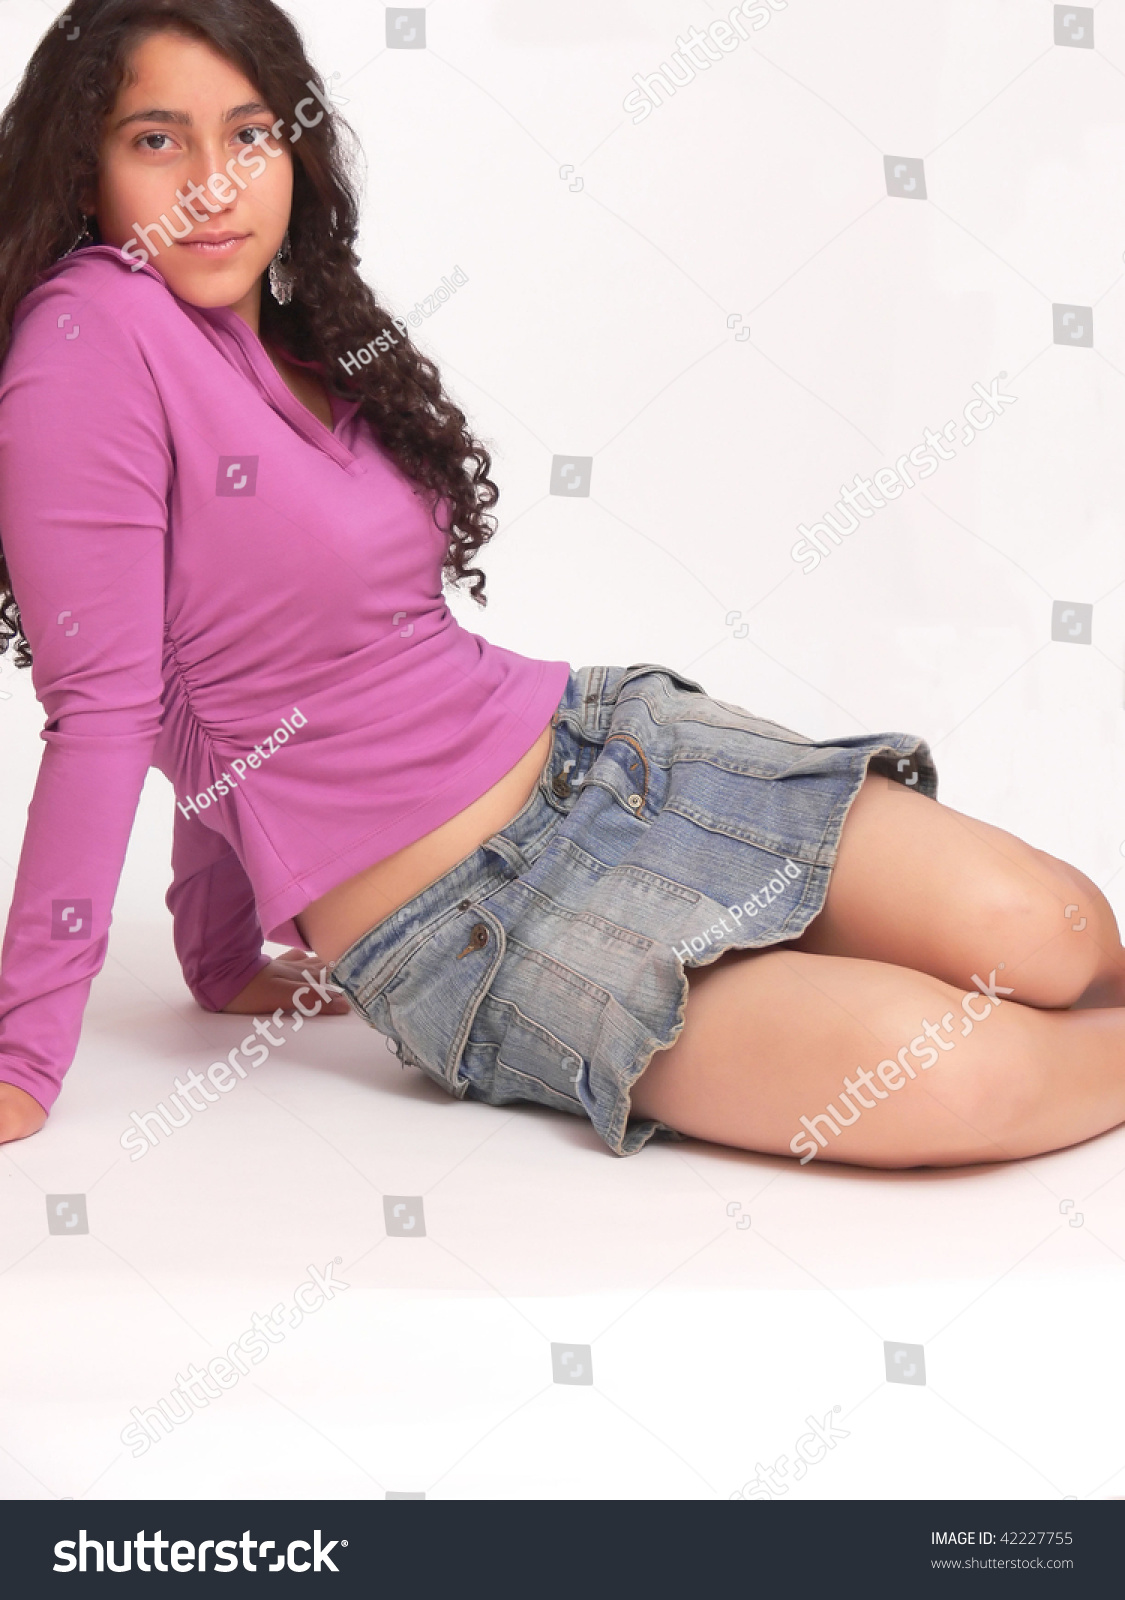 Girls Mini Skirt Upskirt Sitting Down Hot Girl Hd Wallpaper